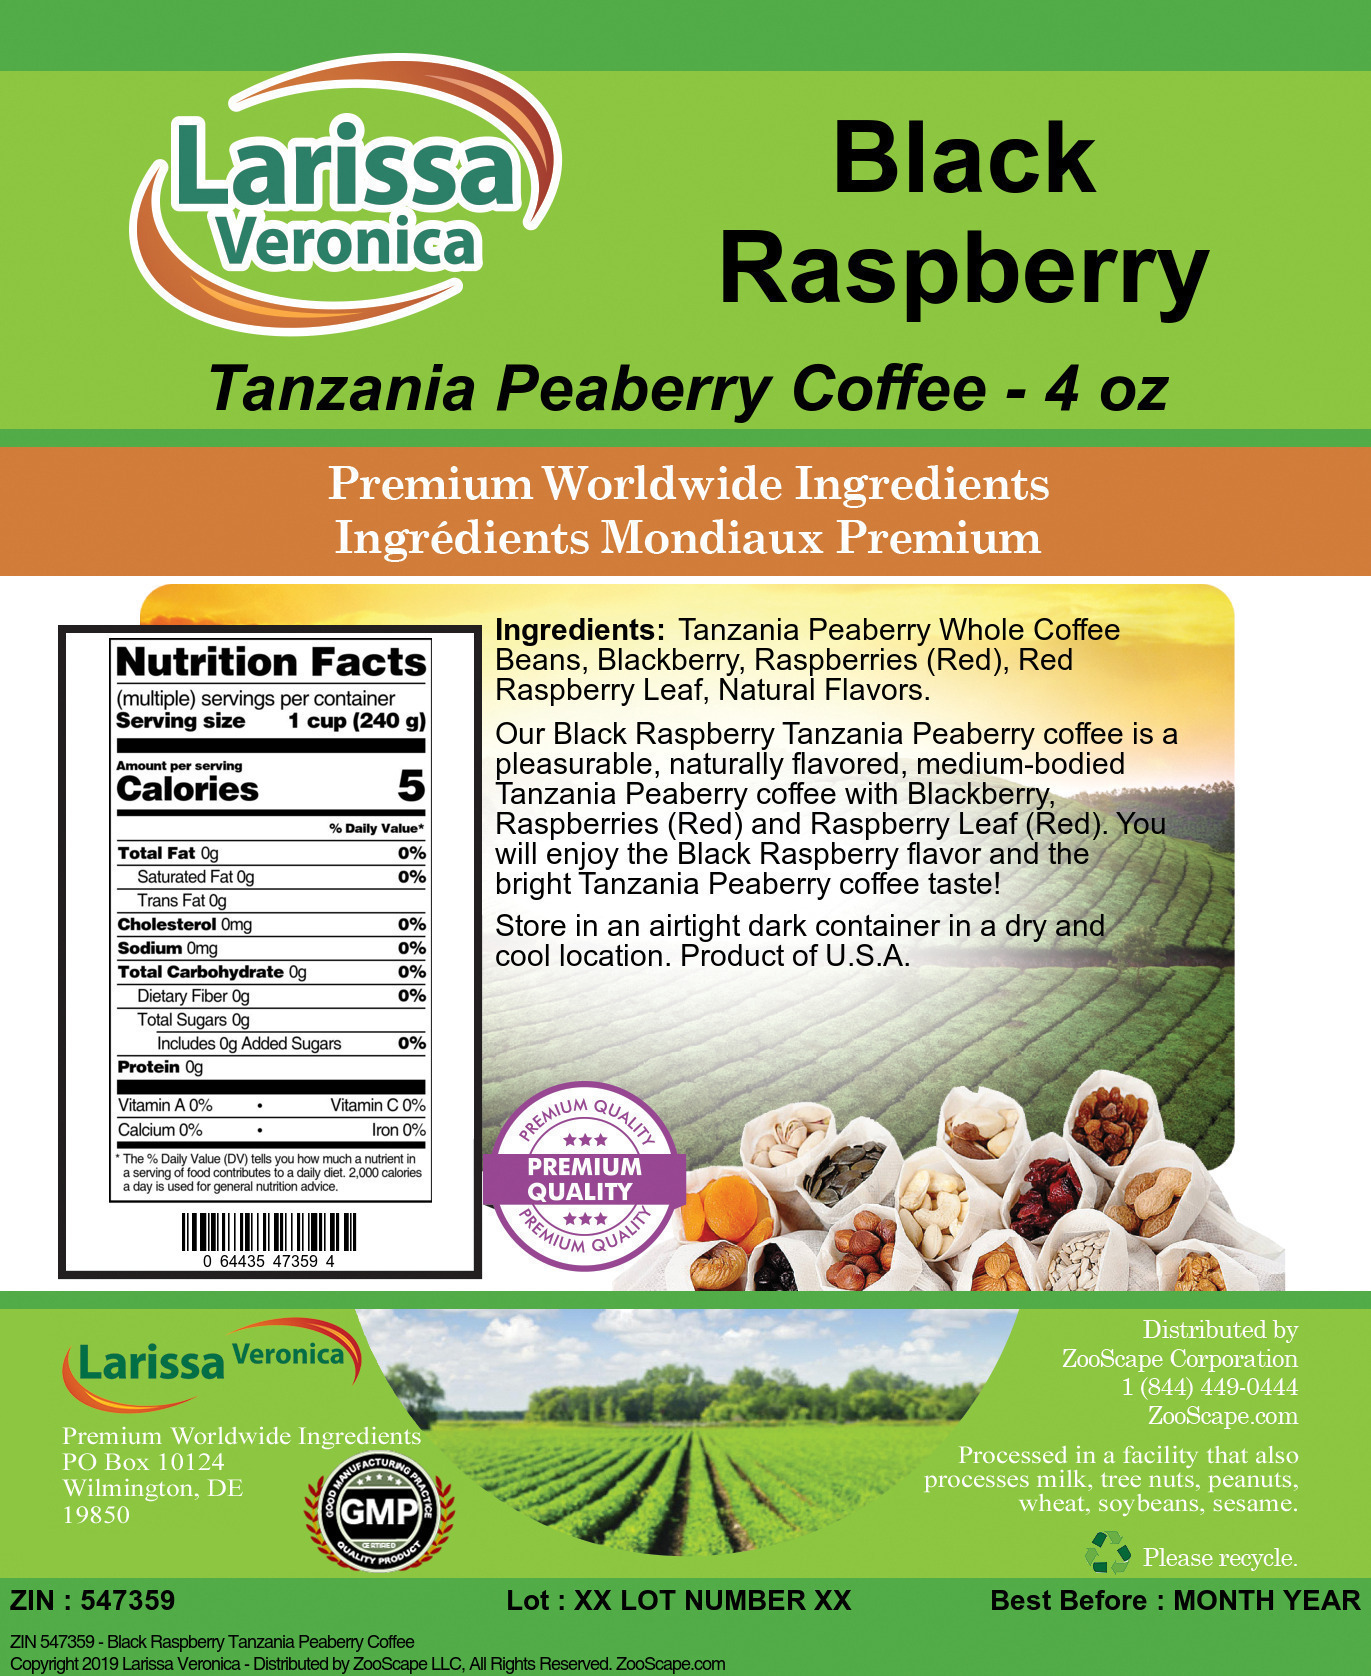 Black Raspberry Tanzania Peaberry Coffee - Label